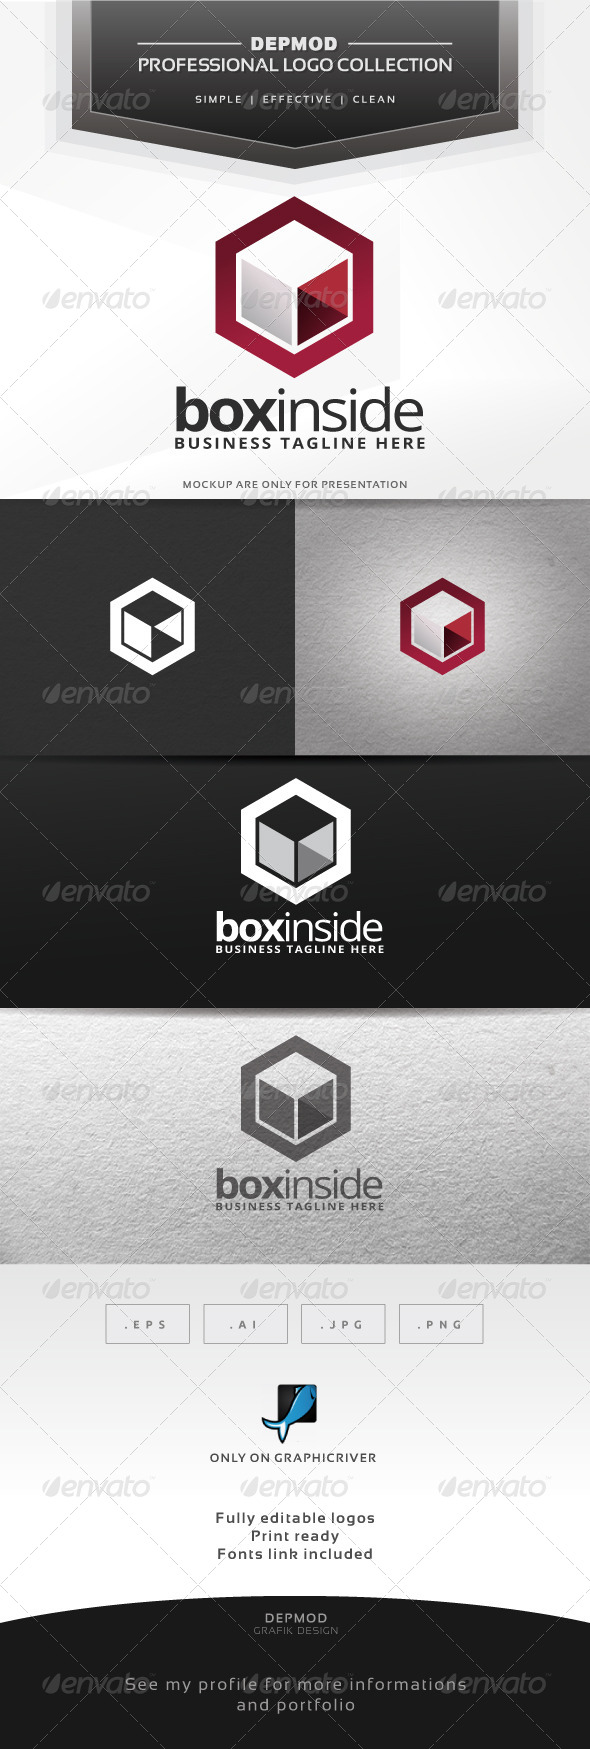 Box Inside Logo